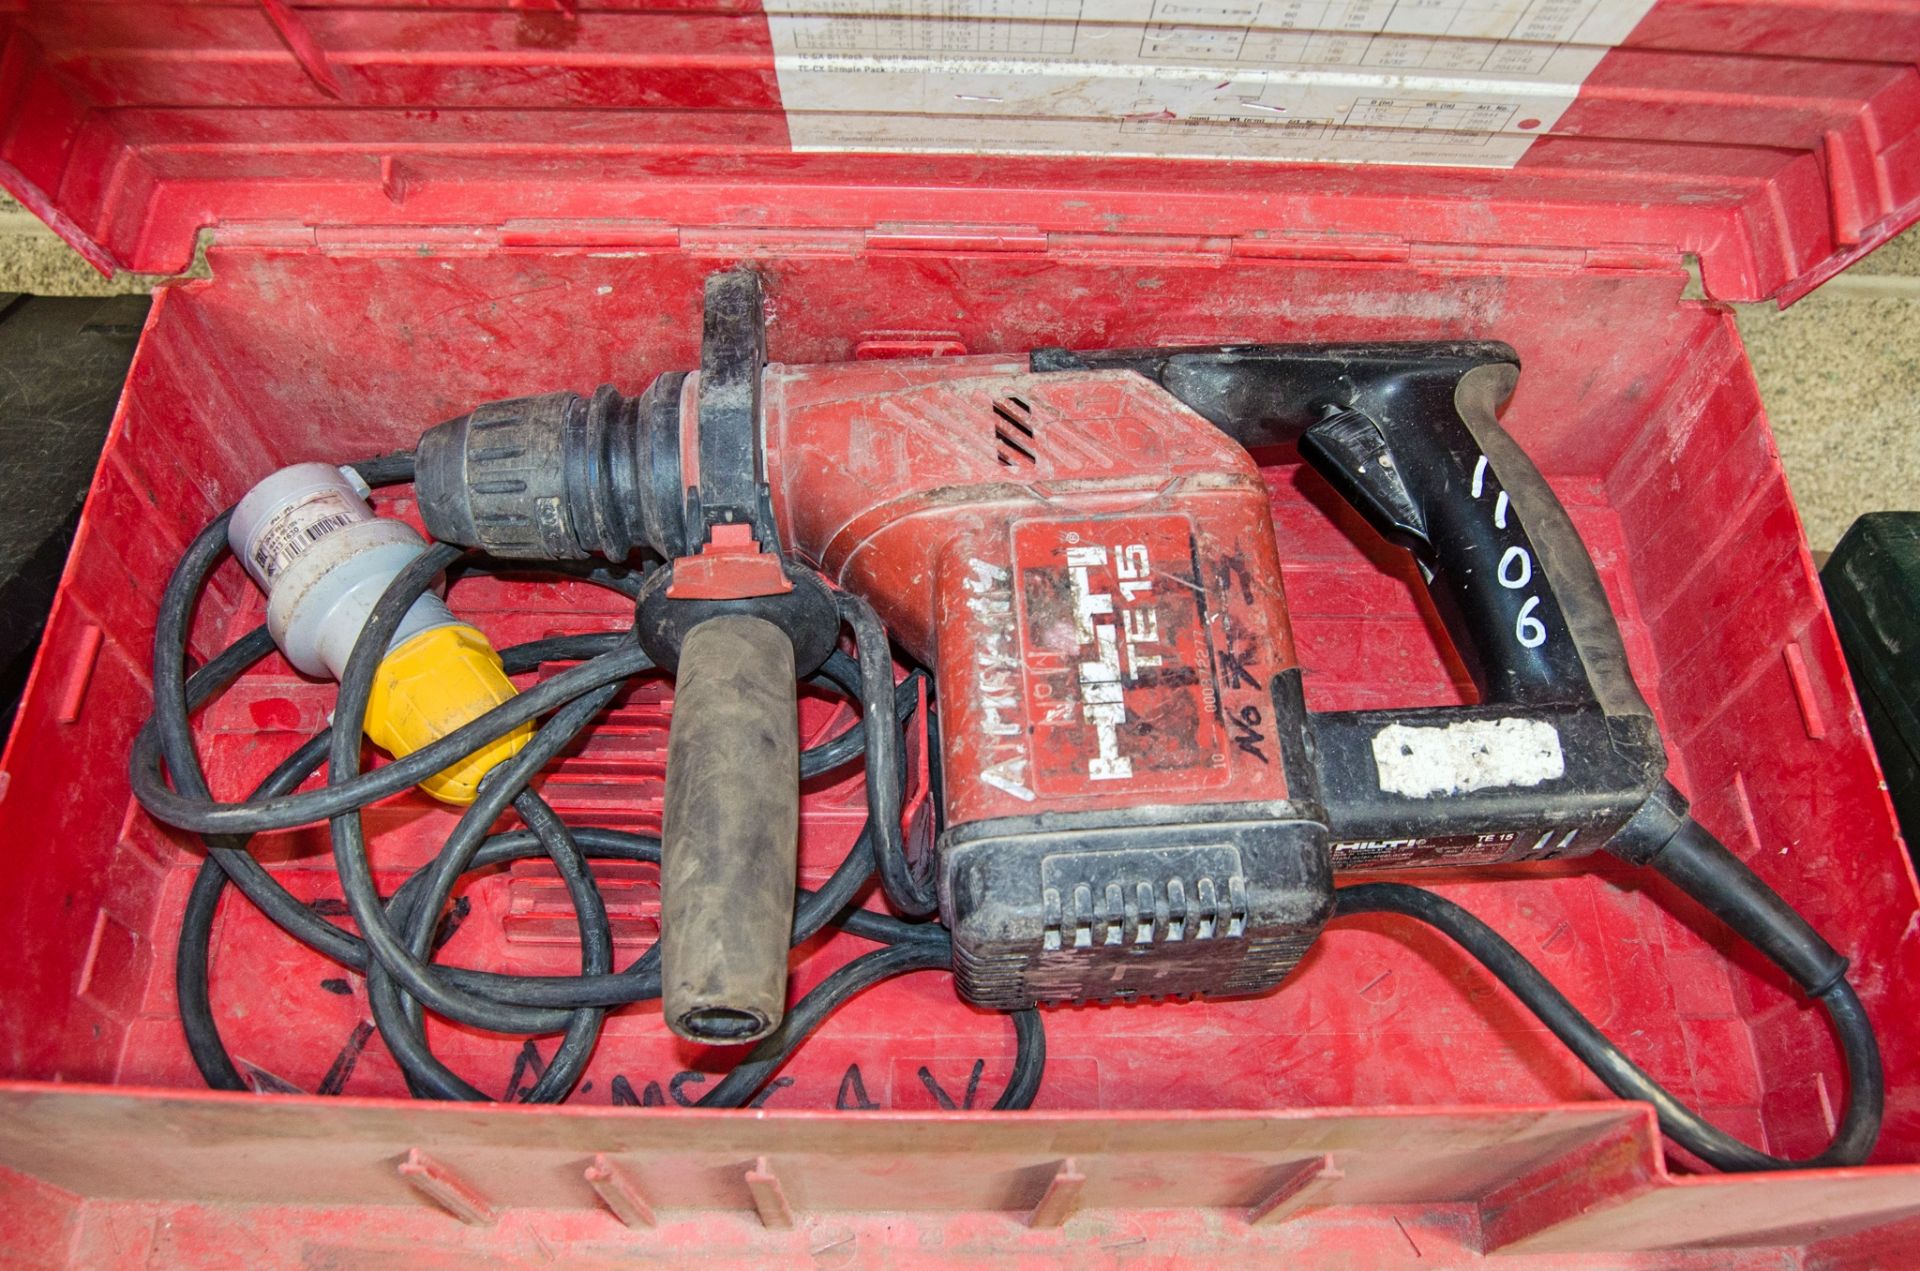 Hilti TE15 110v SDS rotary hammer drill c/w carry case AM7